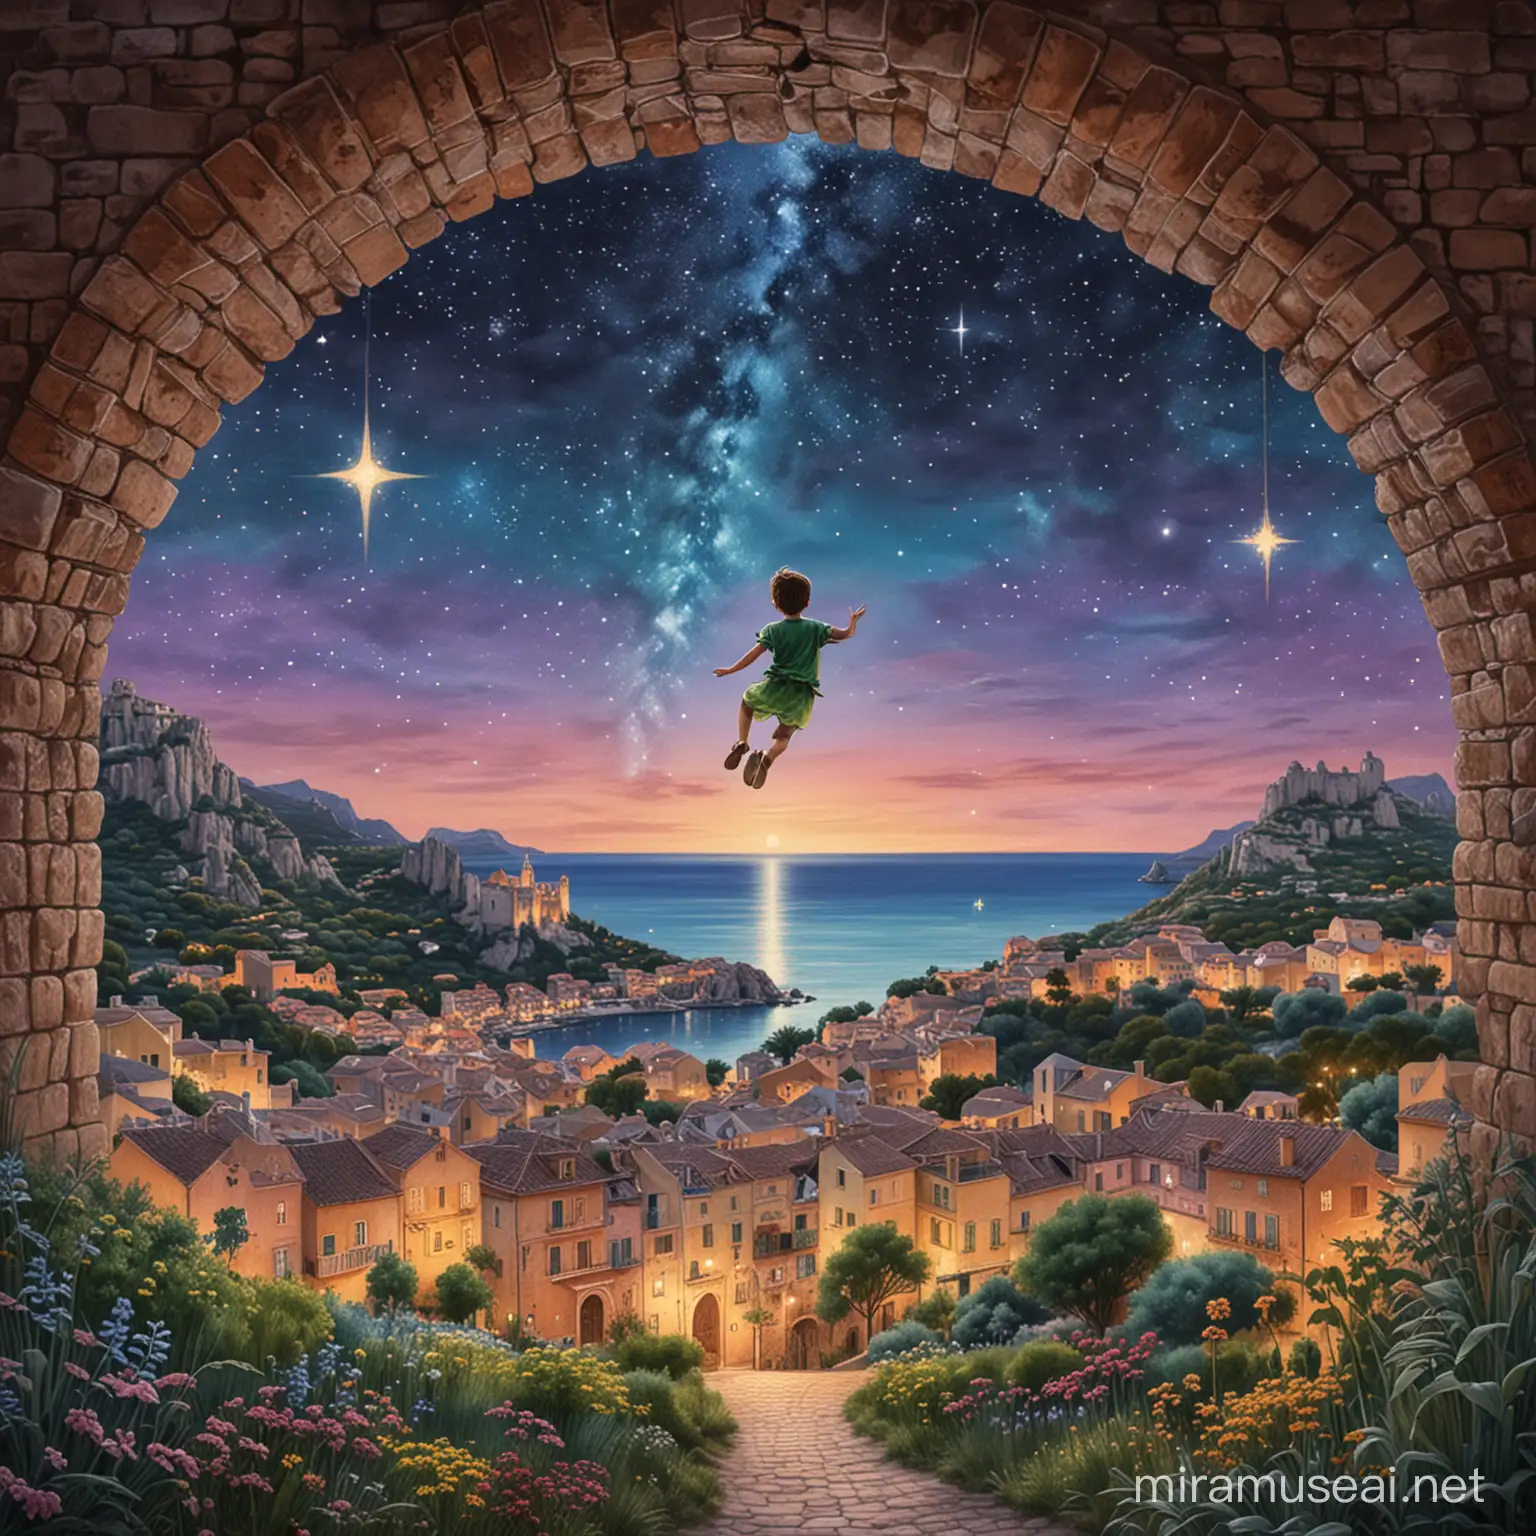 Divinatory Art Peter Pan Flying Over Sparkly Night Sky on Bierknig Mallorca Island